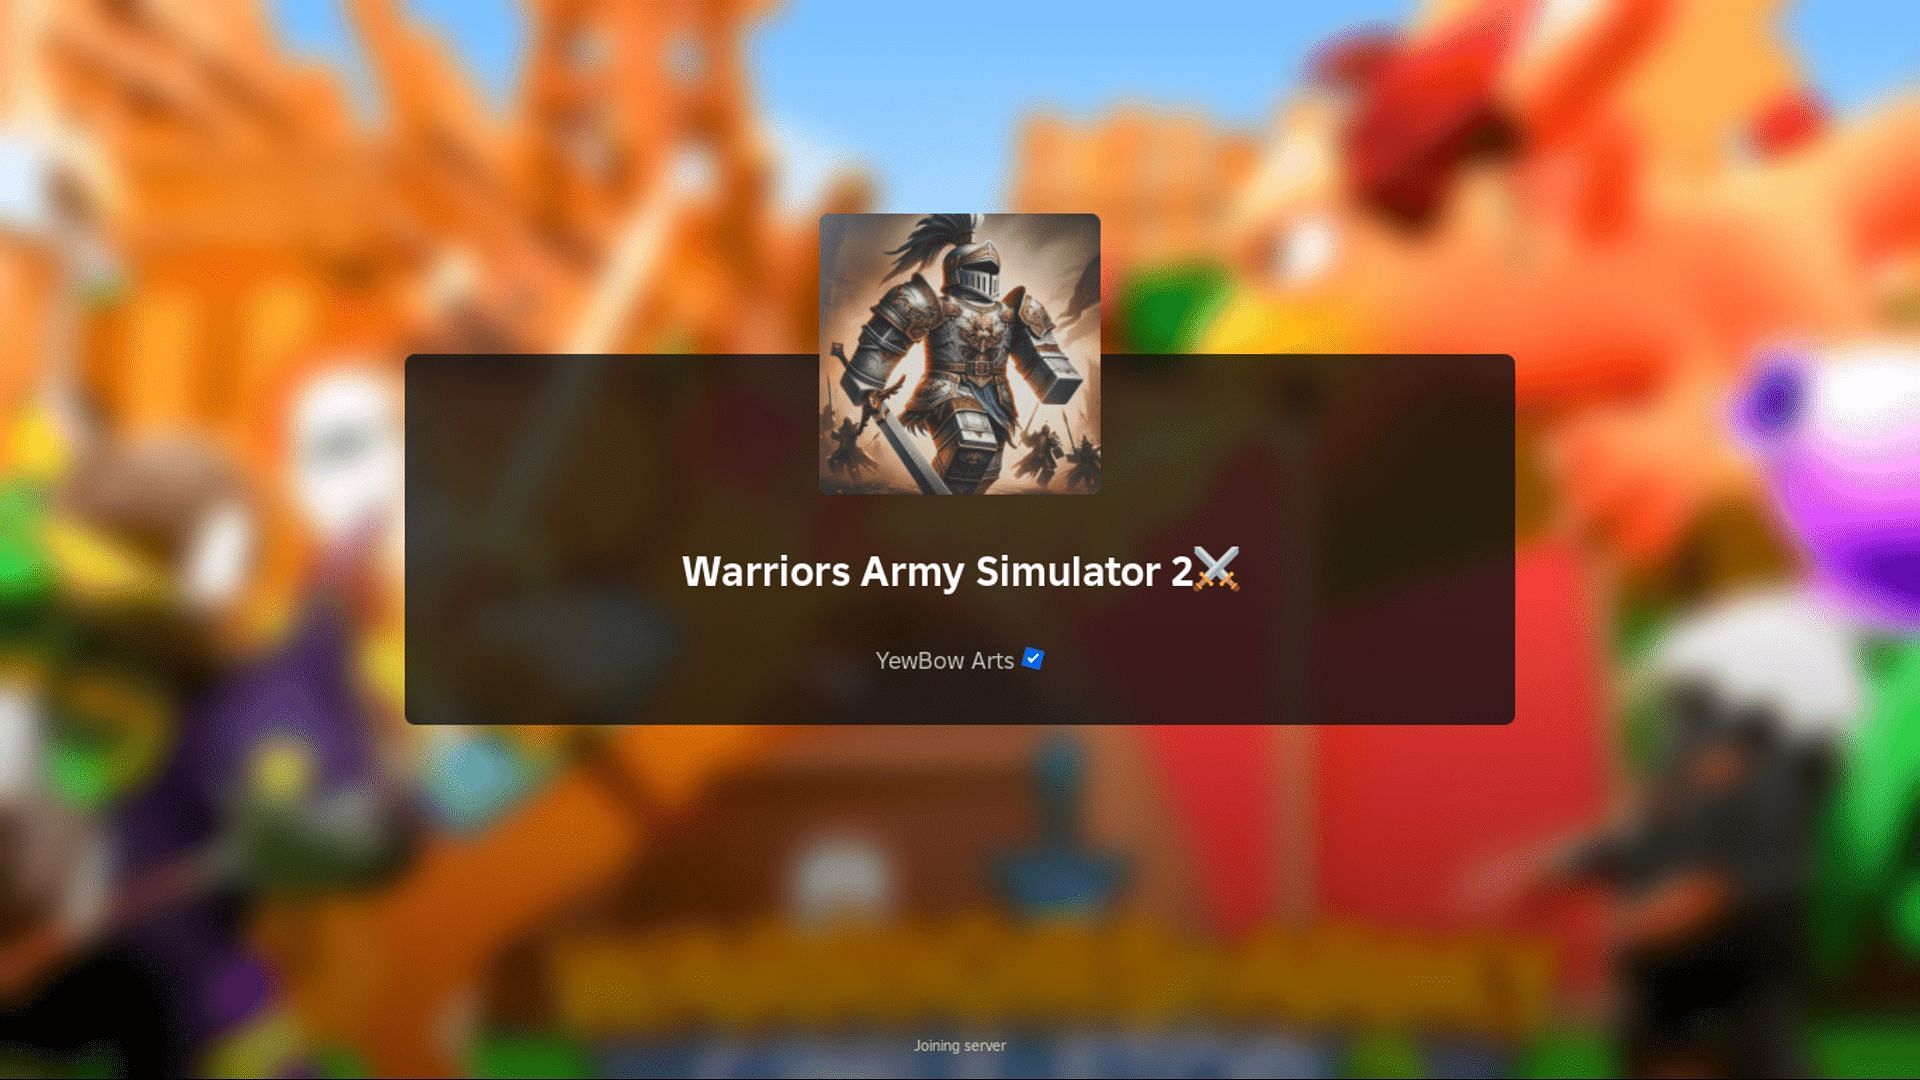 Warriors Army Simulator 2 codes